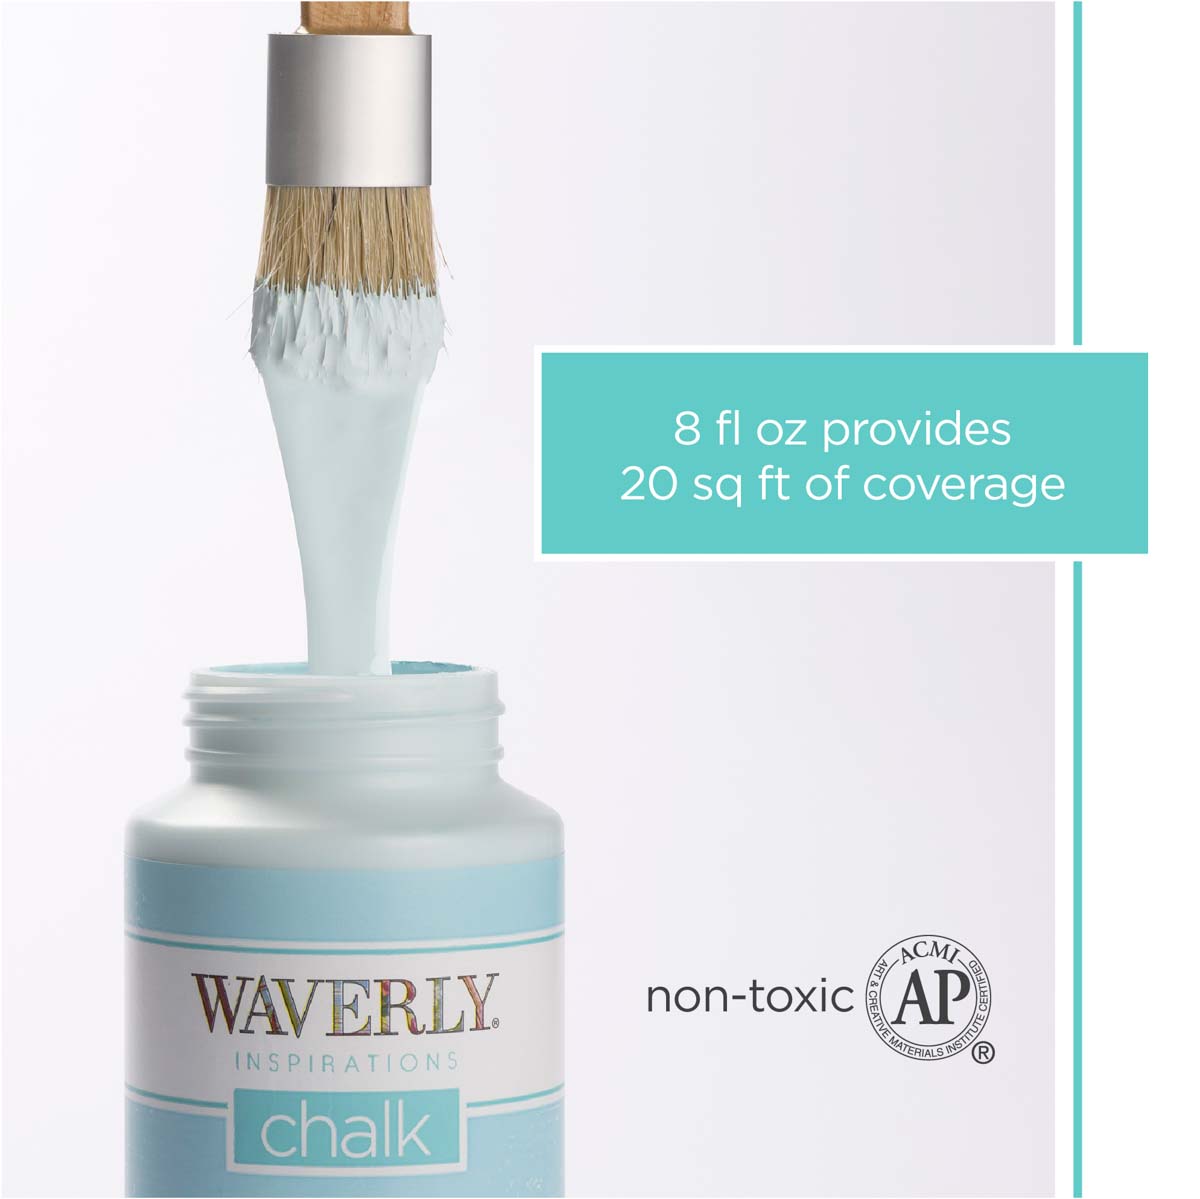 Waverly ® Inspirations Chalk Finish Acrylic Paint - Night Sky, 8 oz. - 61169E